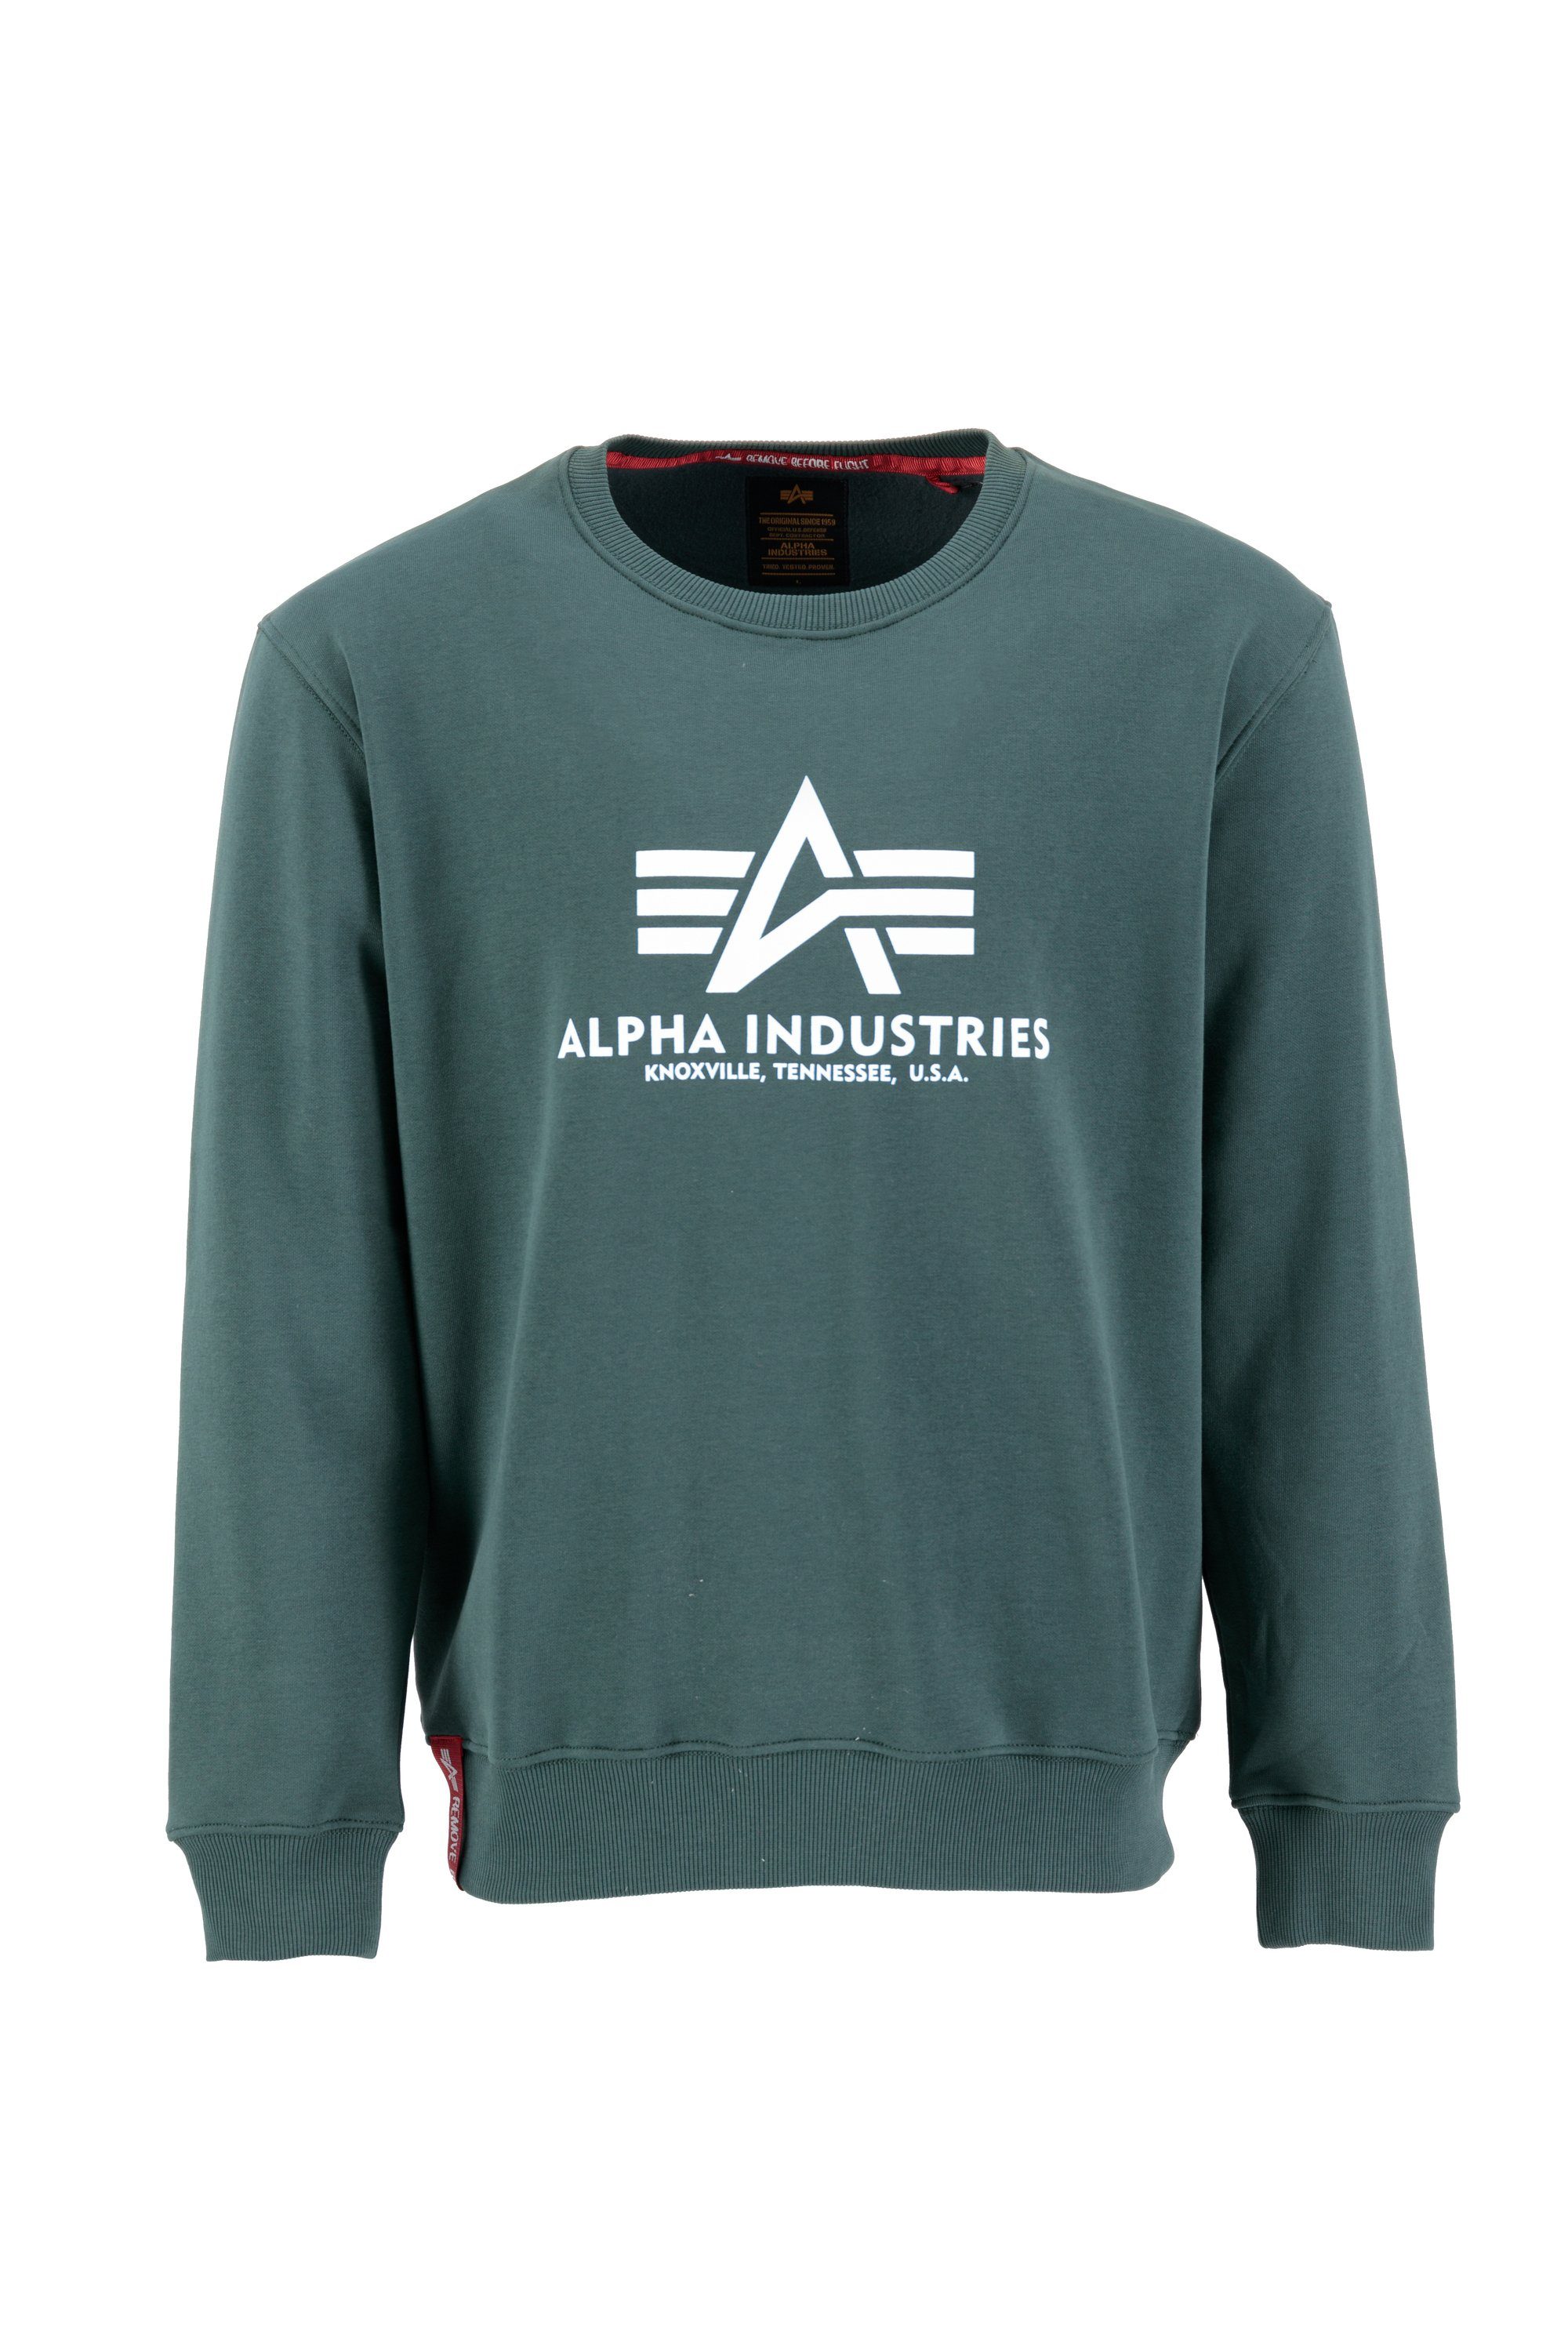 Alpha Industries Sweater Alpha Basic Sweater navy Sweatshirts - Men green Industries